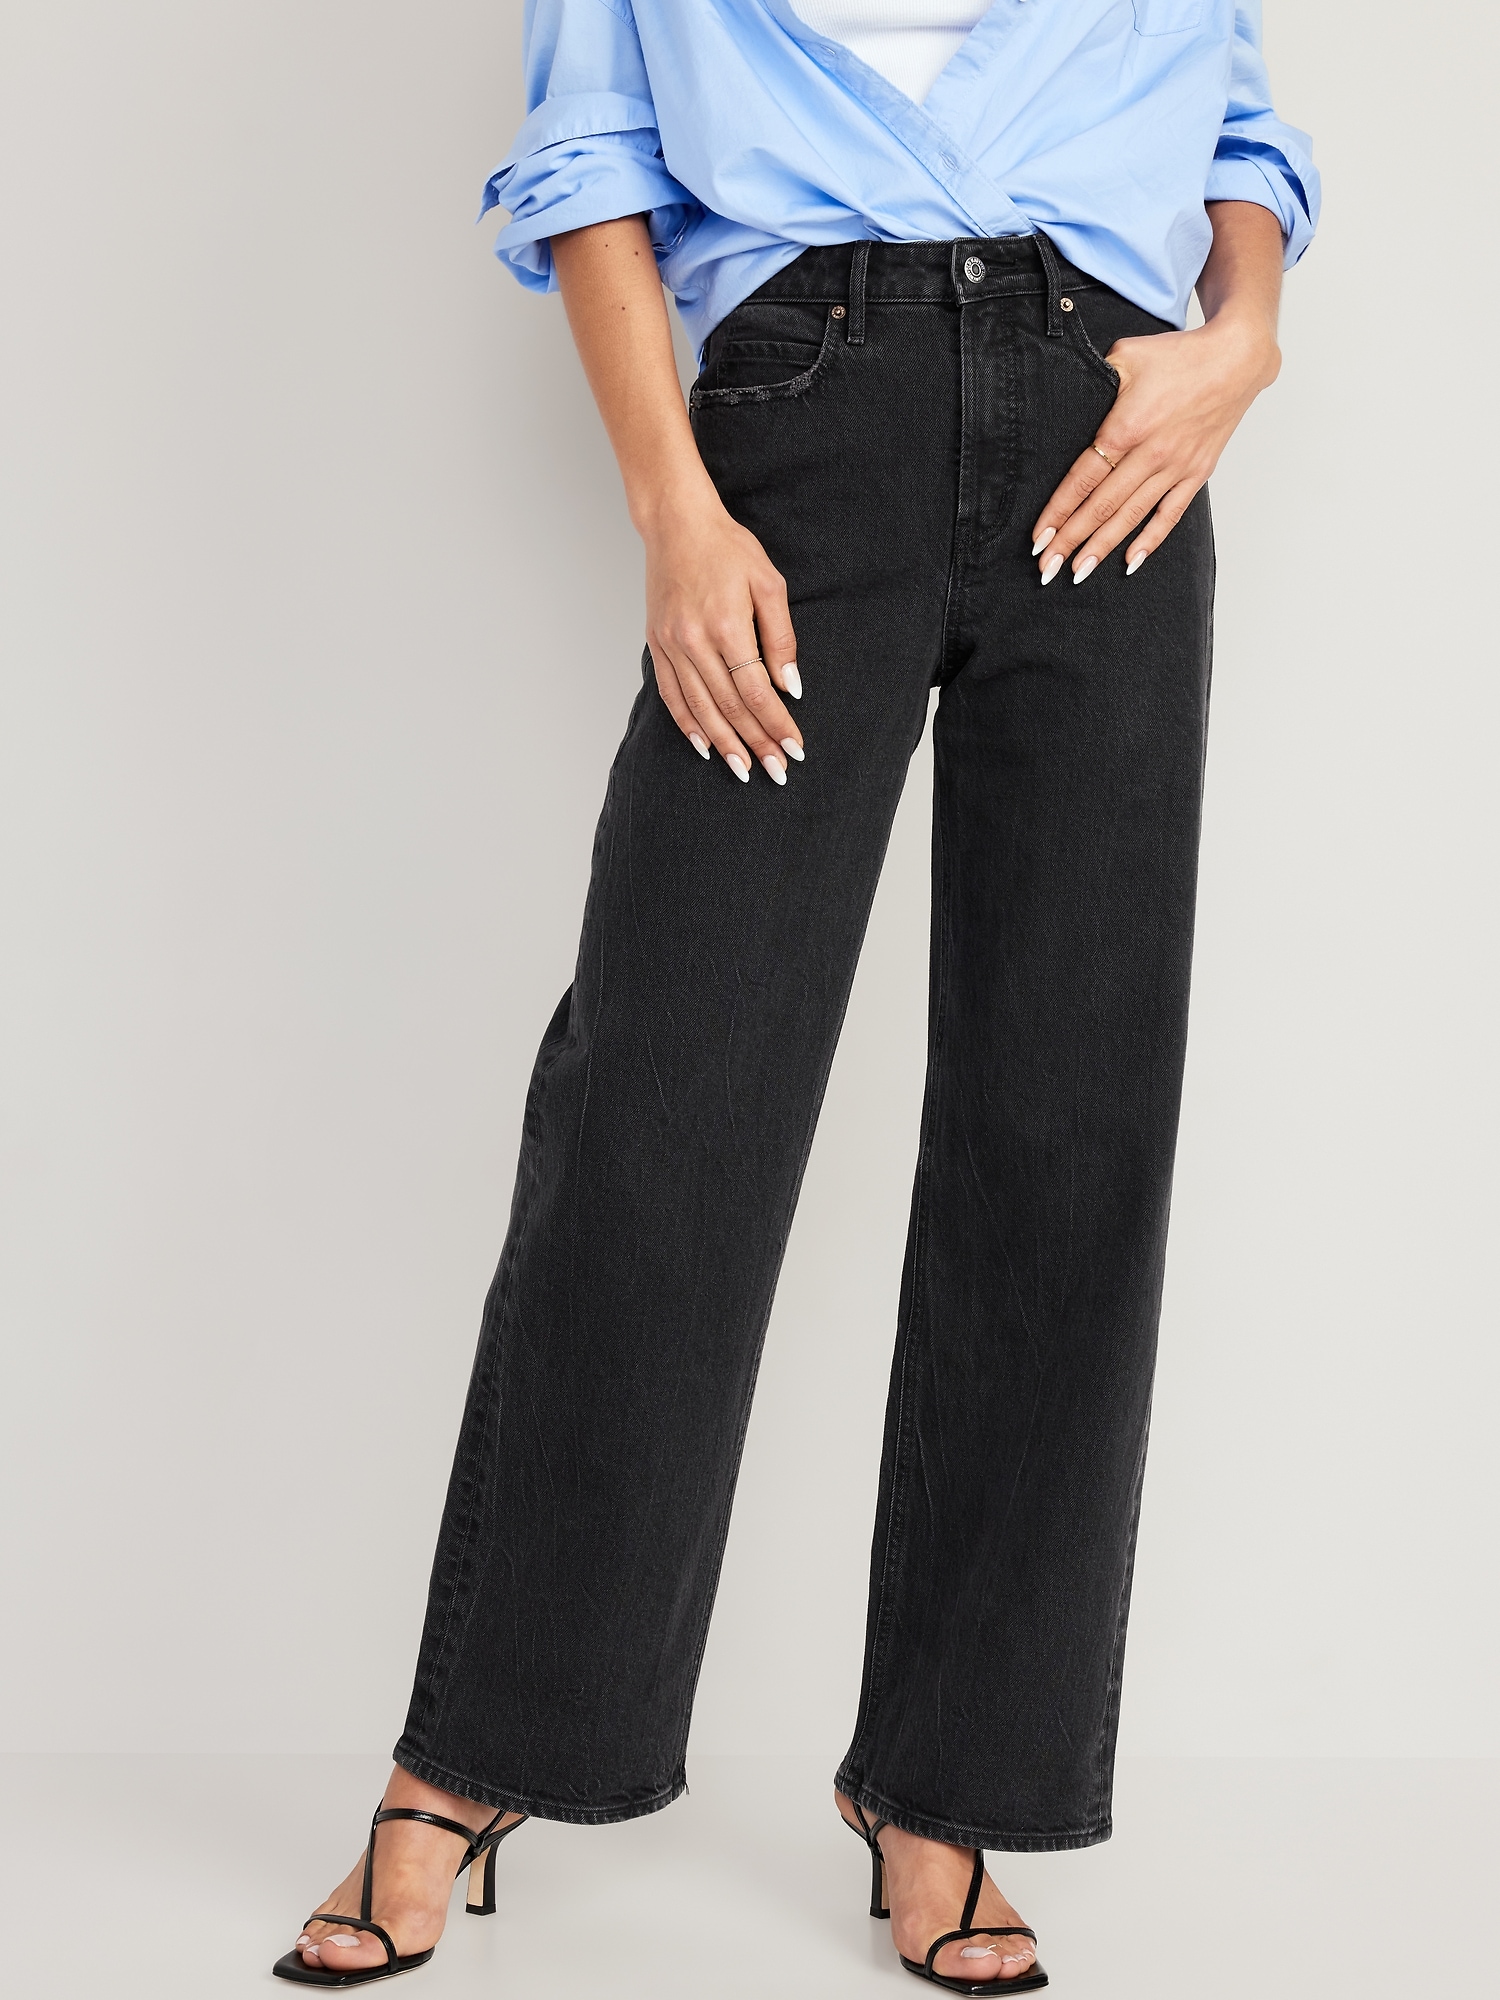 Wide Leg - Jeans - Clothing - Woman - PULL&BEAR Malta-saigonsouth.com.vn